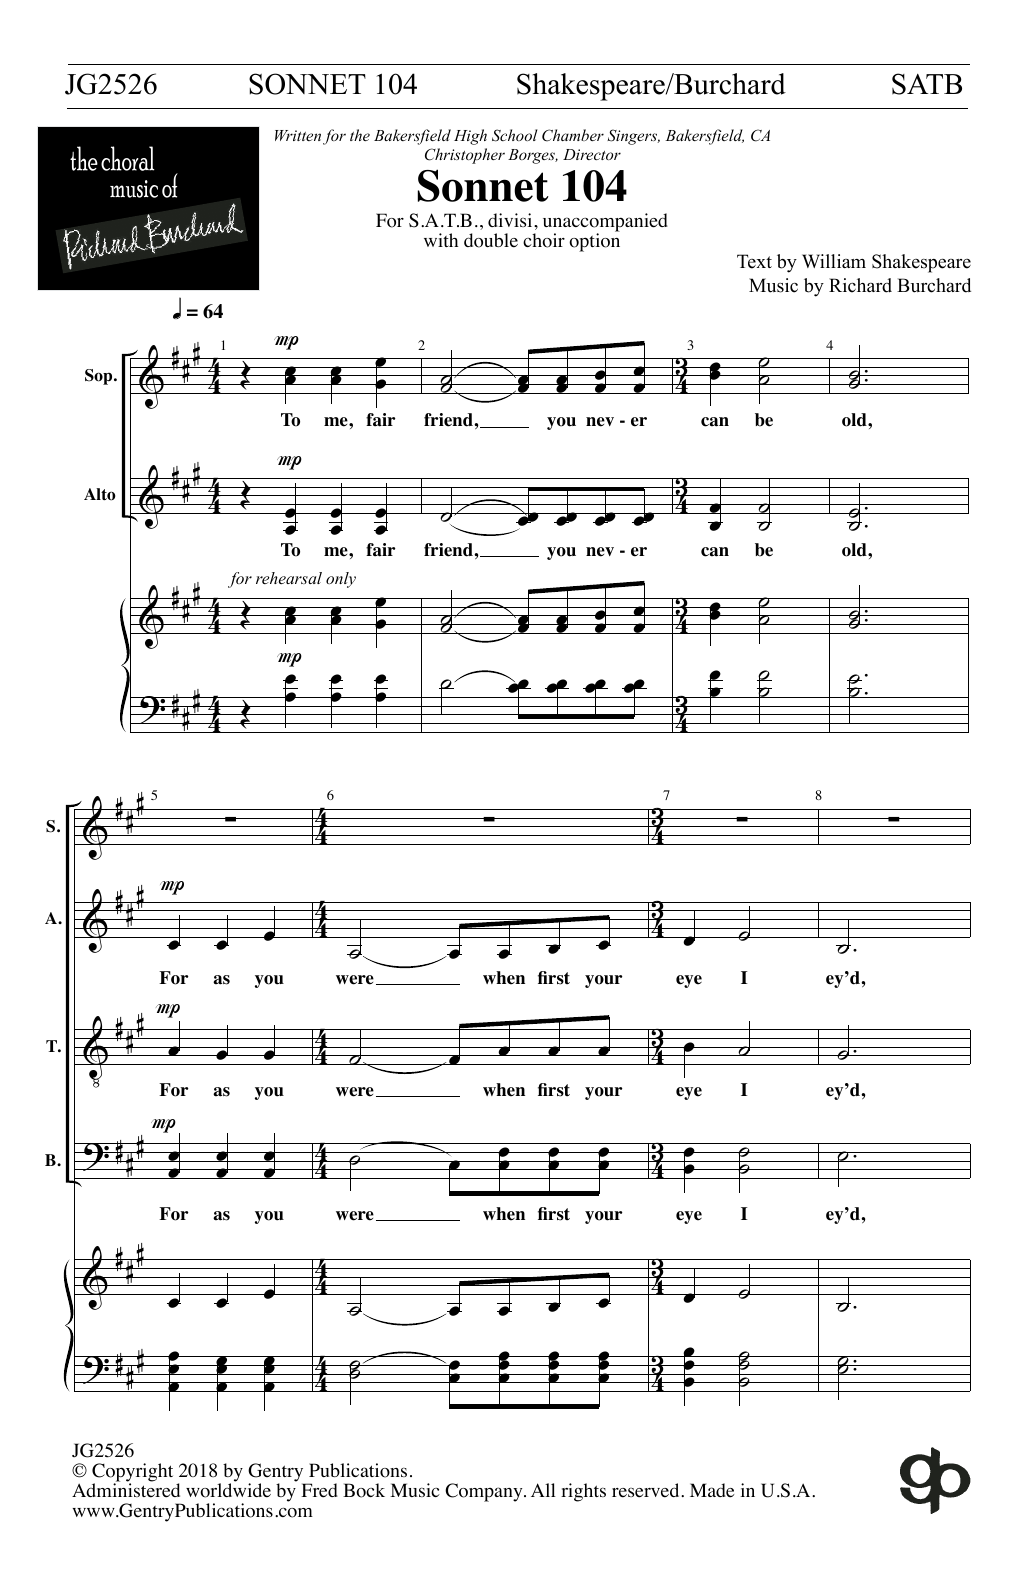 Richard Burchard Sonnet 104 Sheet Music Notes & Chords for SATB Choir - Download or Print PDF